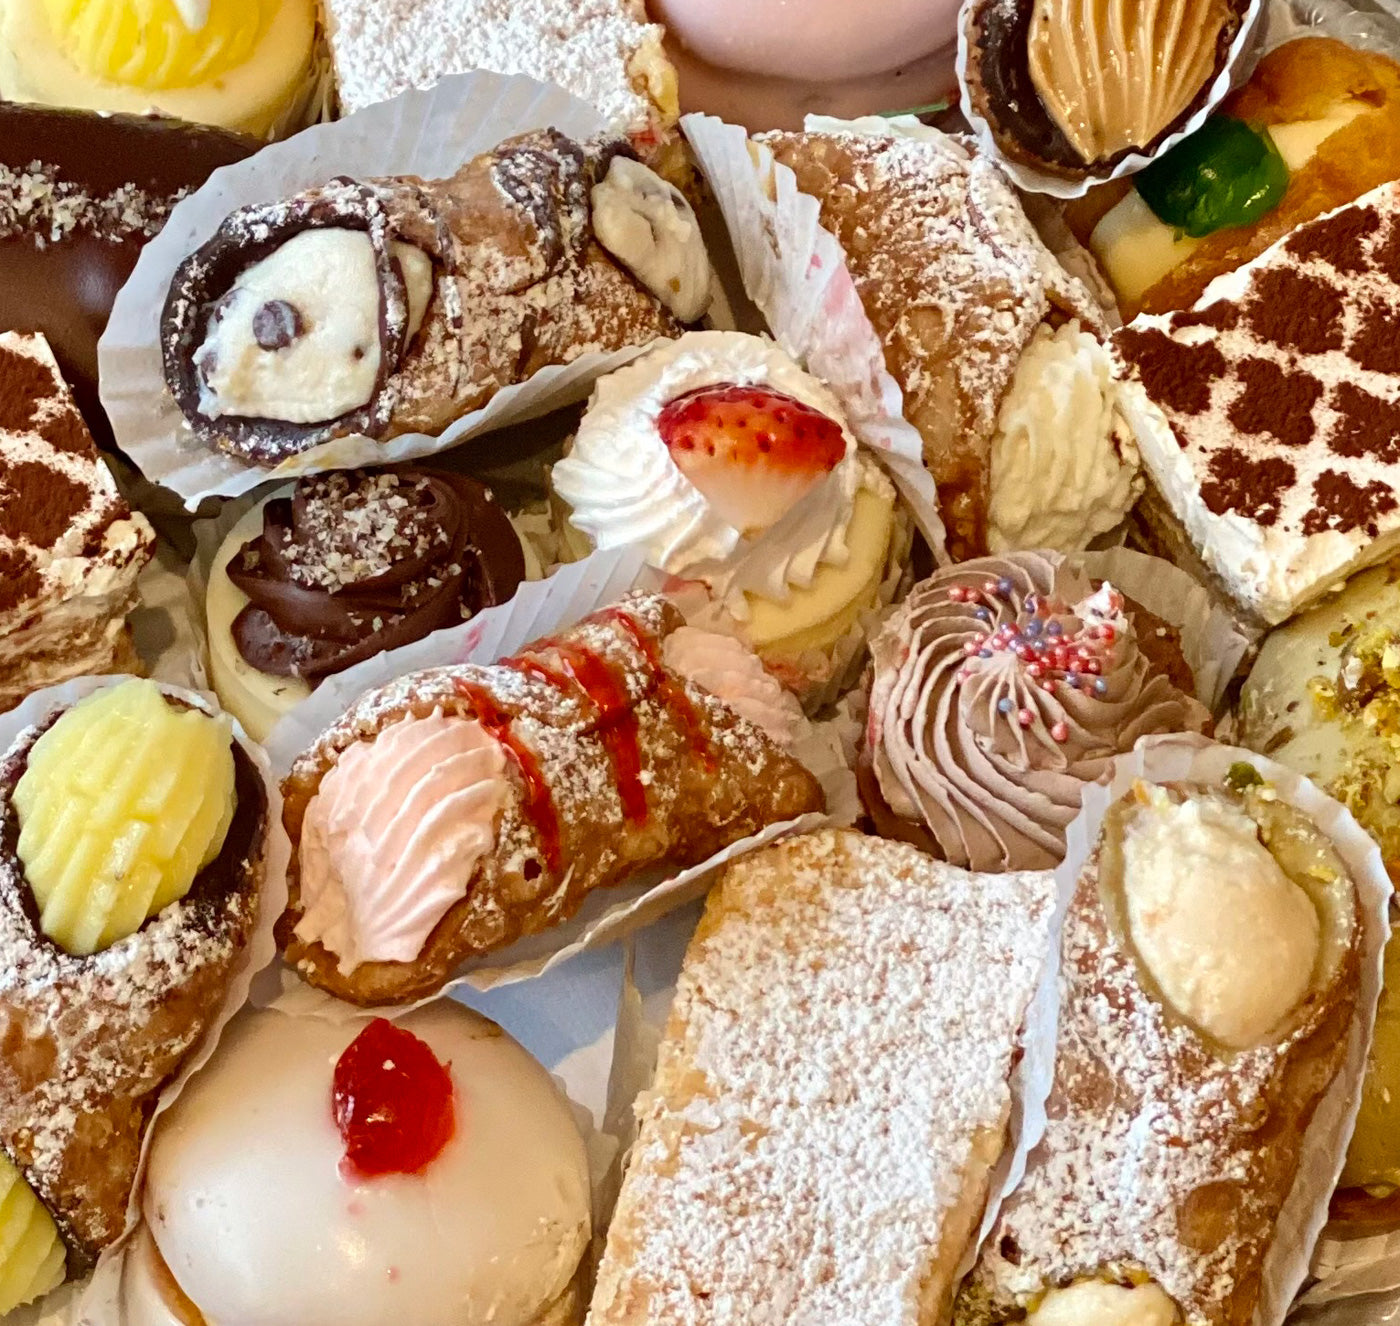 Platter of Italian pastries